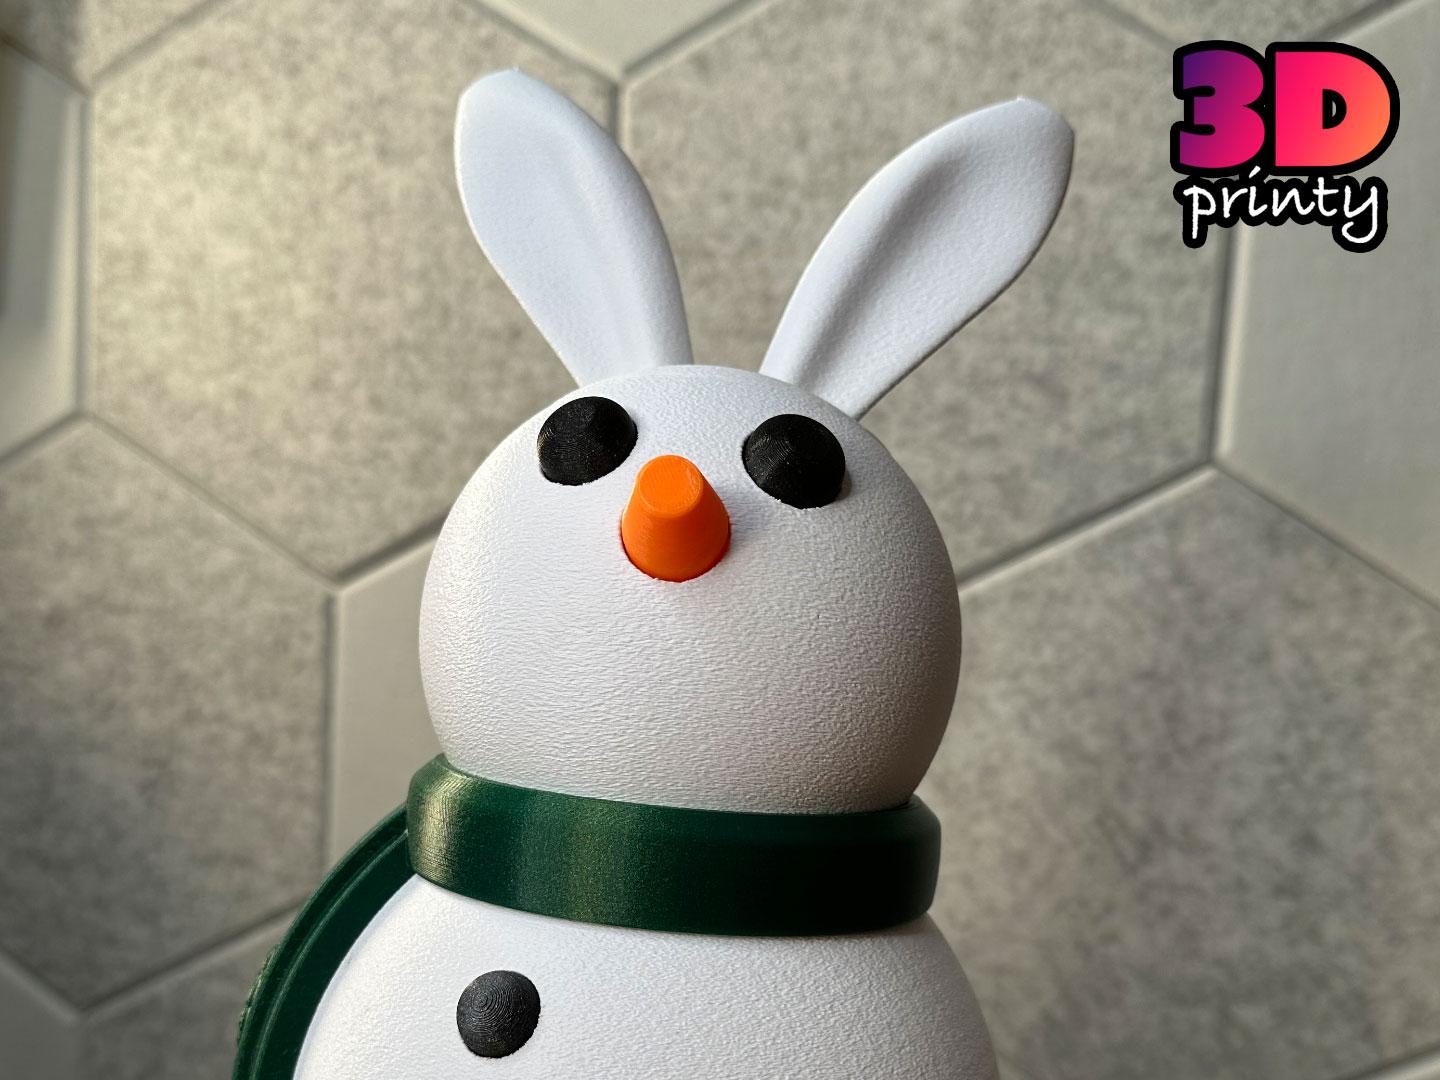 Giant Snowman - Bunny Ears 3d model